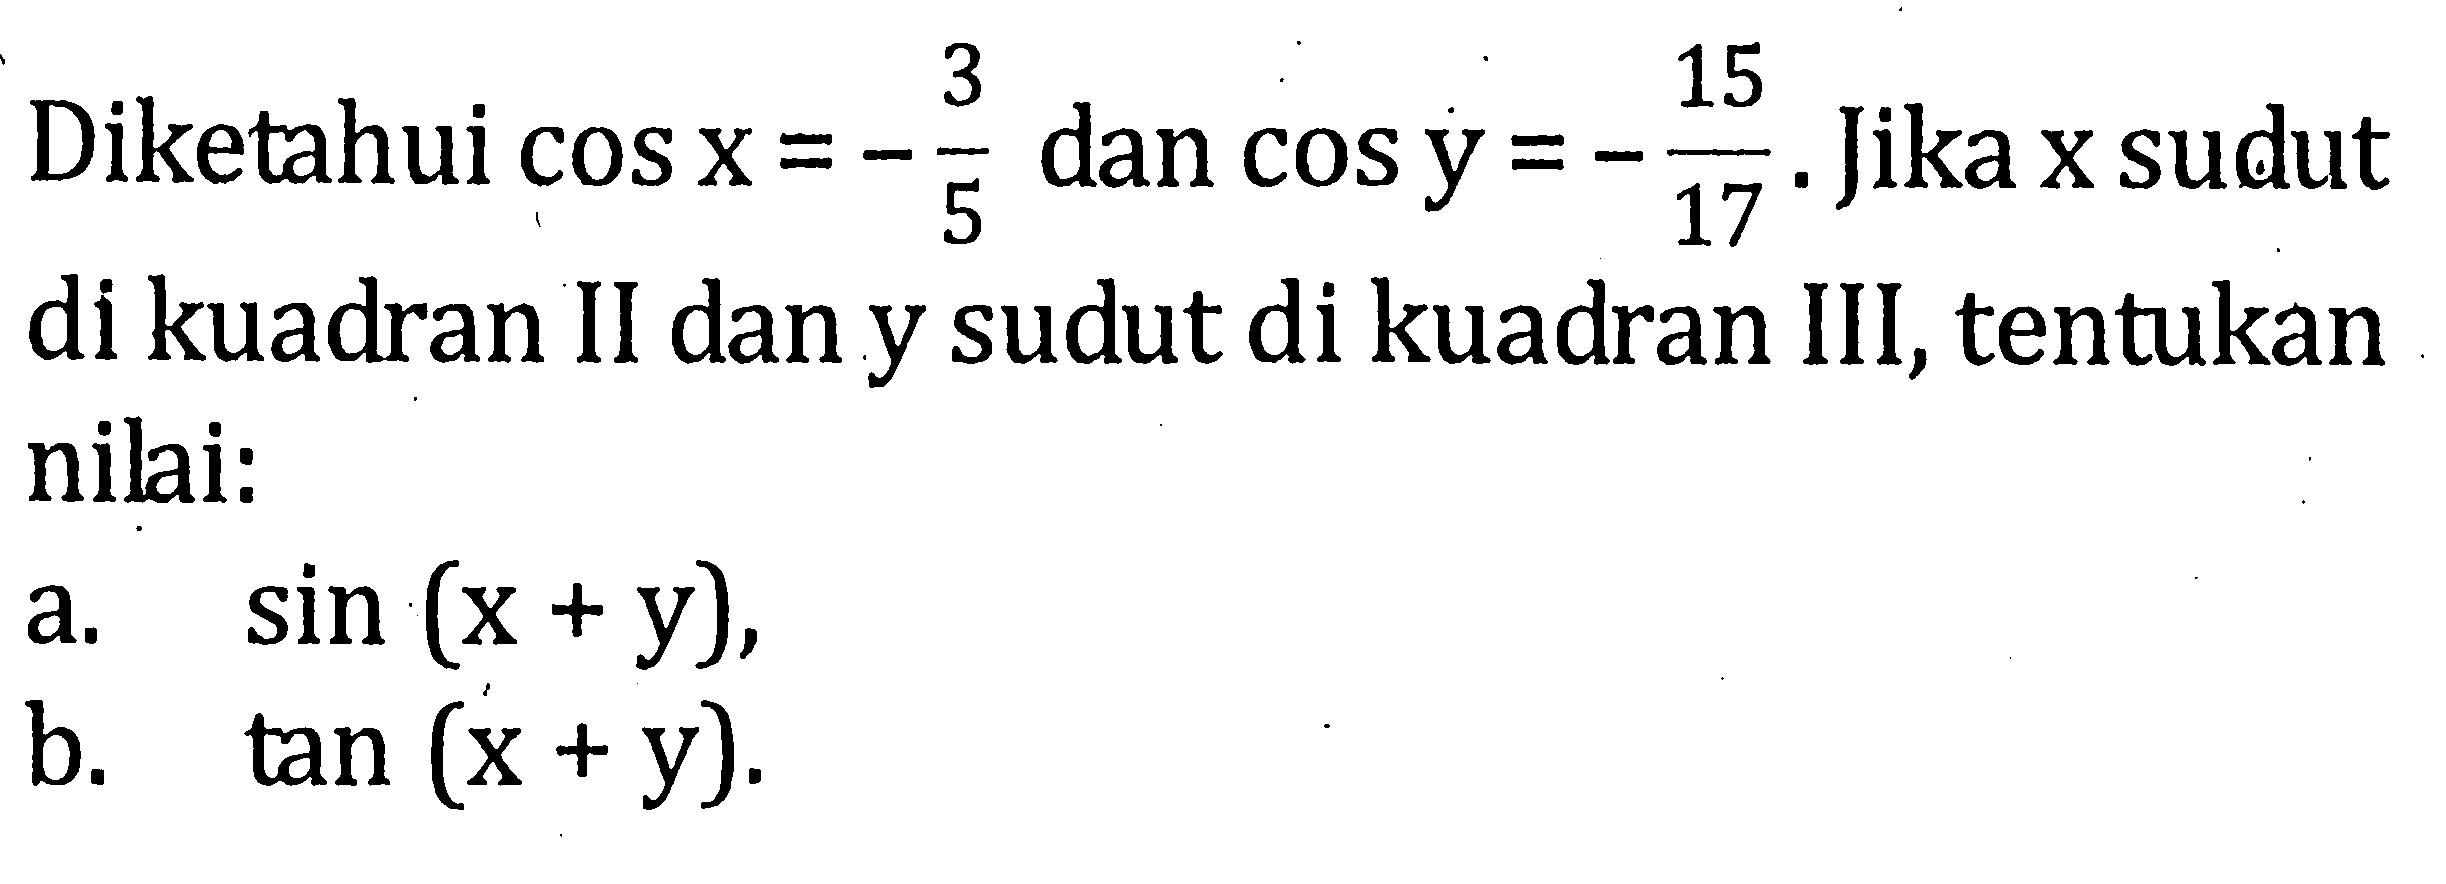 Diketahui cos x=-3/5 dan cos y=-15/17. Jika x sudut di kuadran II dan y sudut di kuadran III, tentukan nilai: a. sin (x+y), b. tan (x+y).